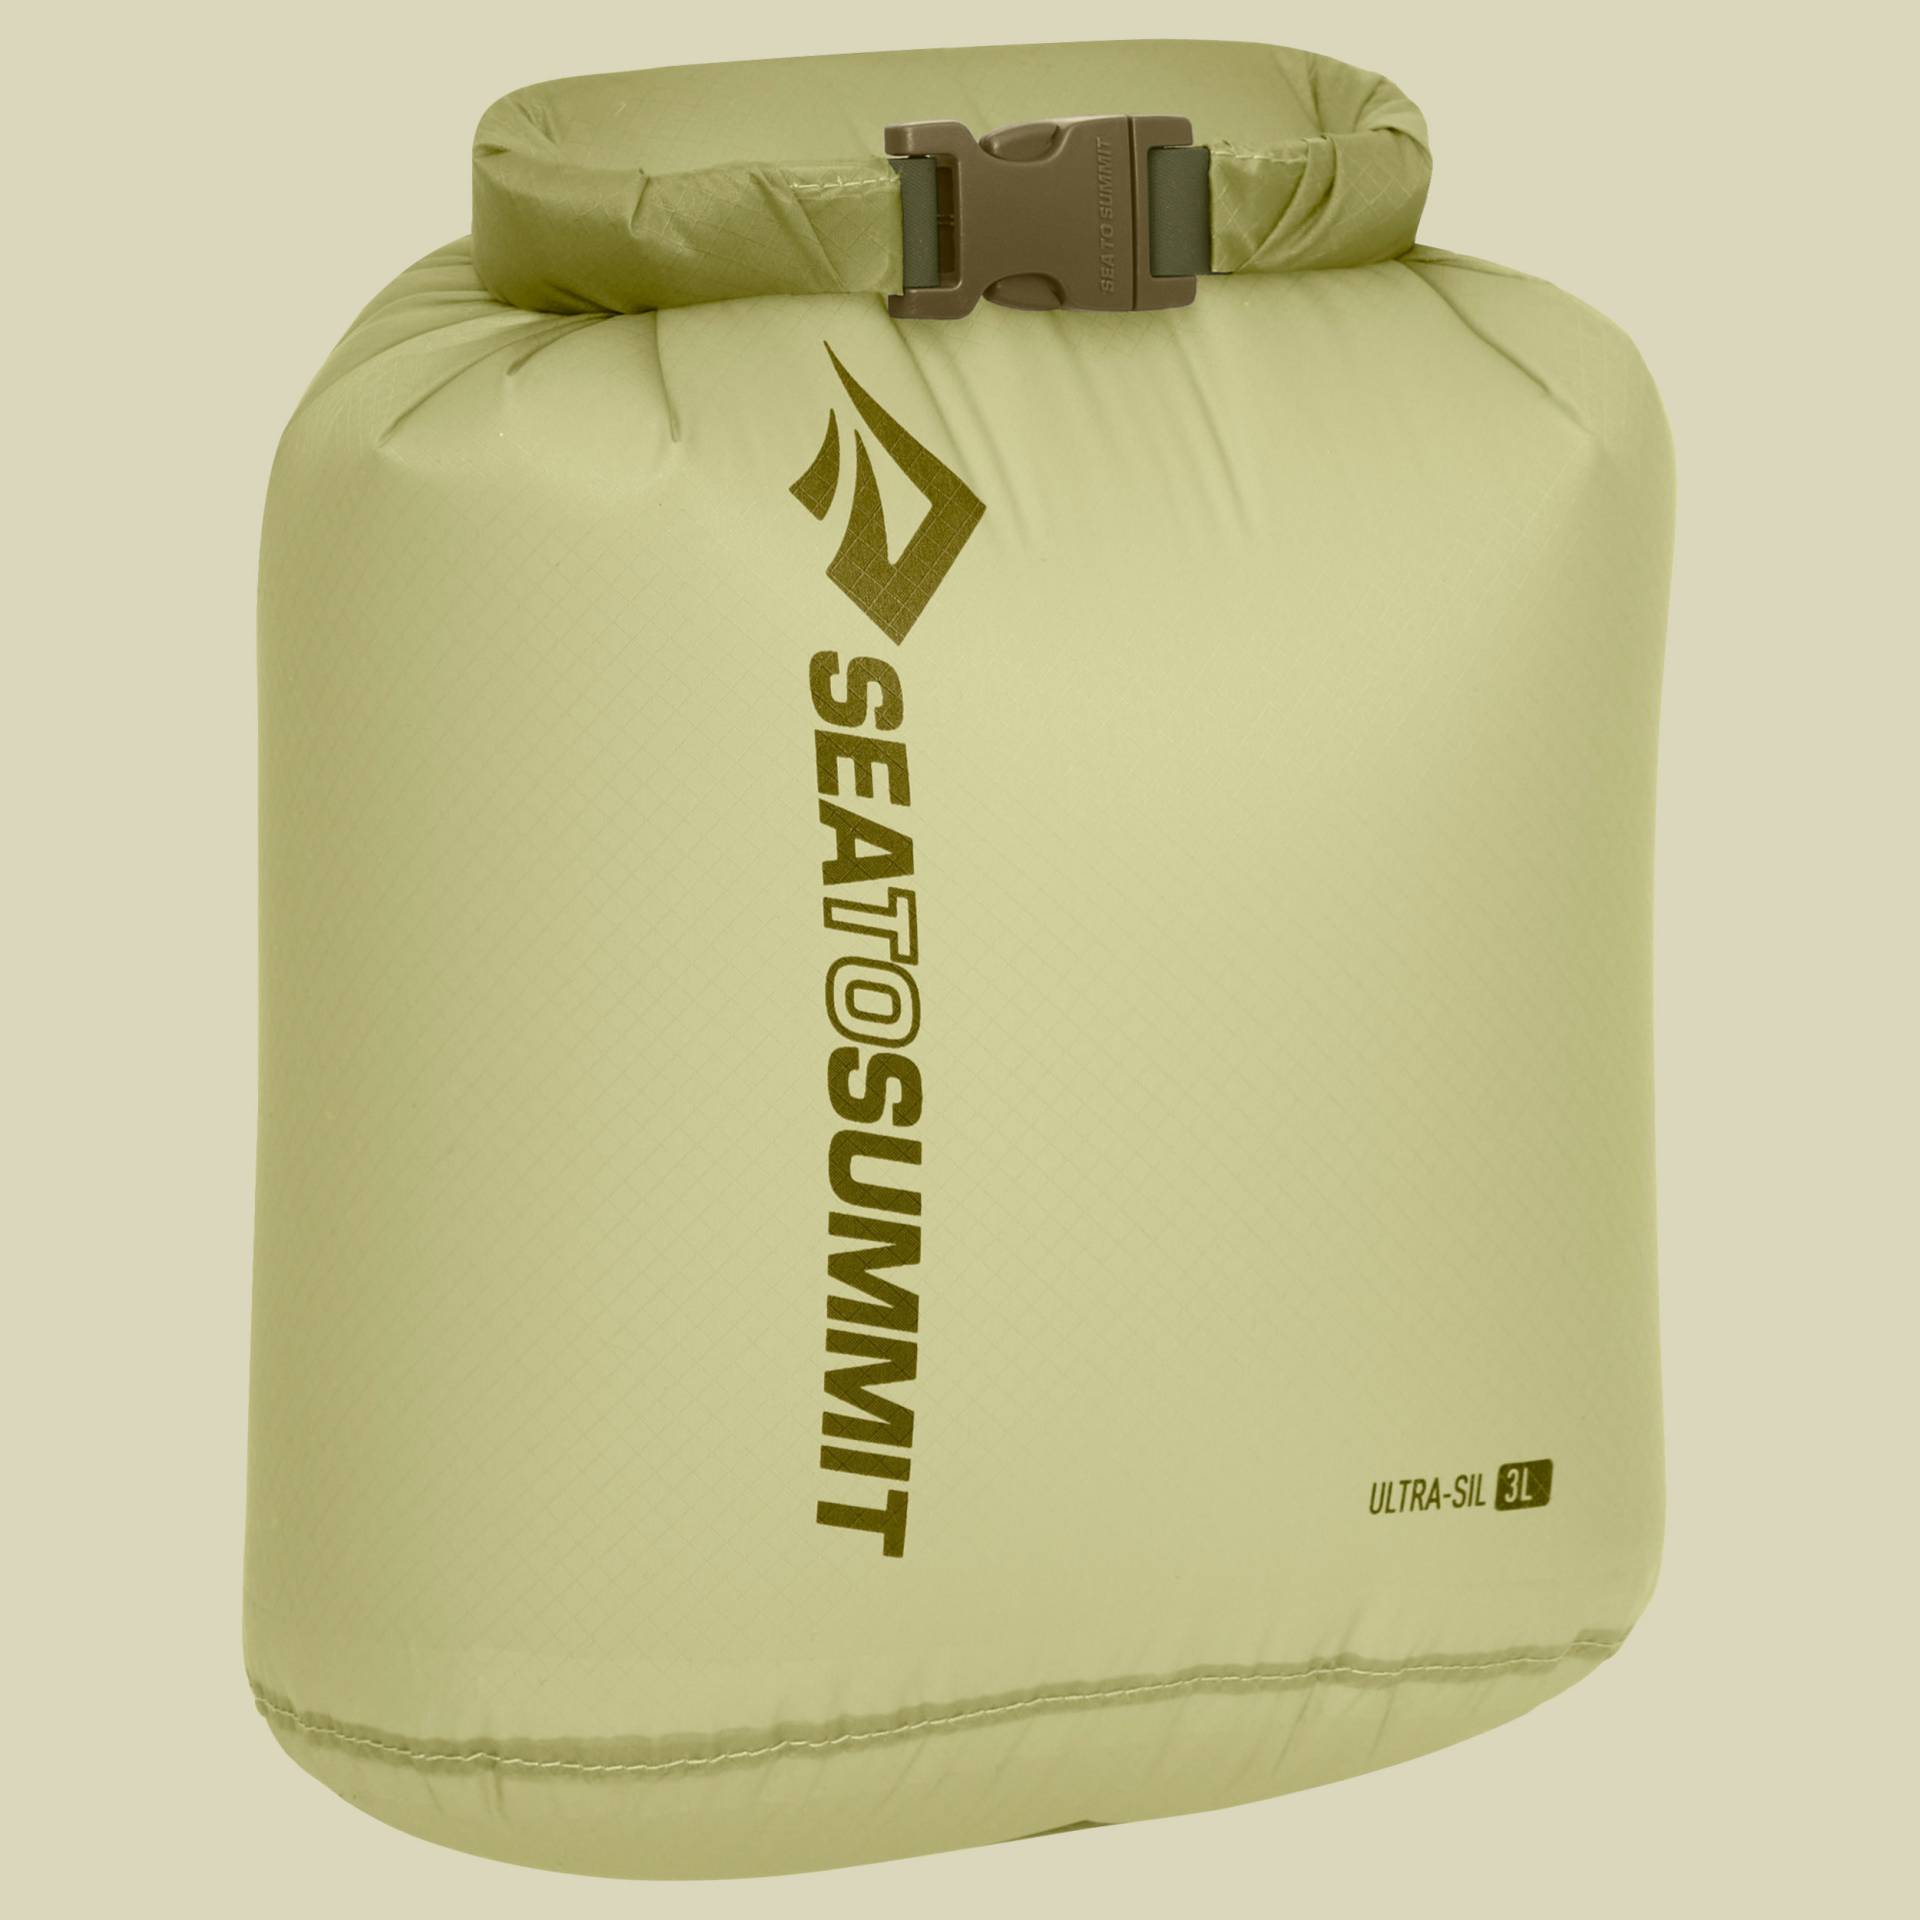 Ultra-Sil Dry Bag 3L Volumen 3 Farbe tarragon green von Sea to Summit